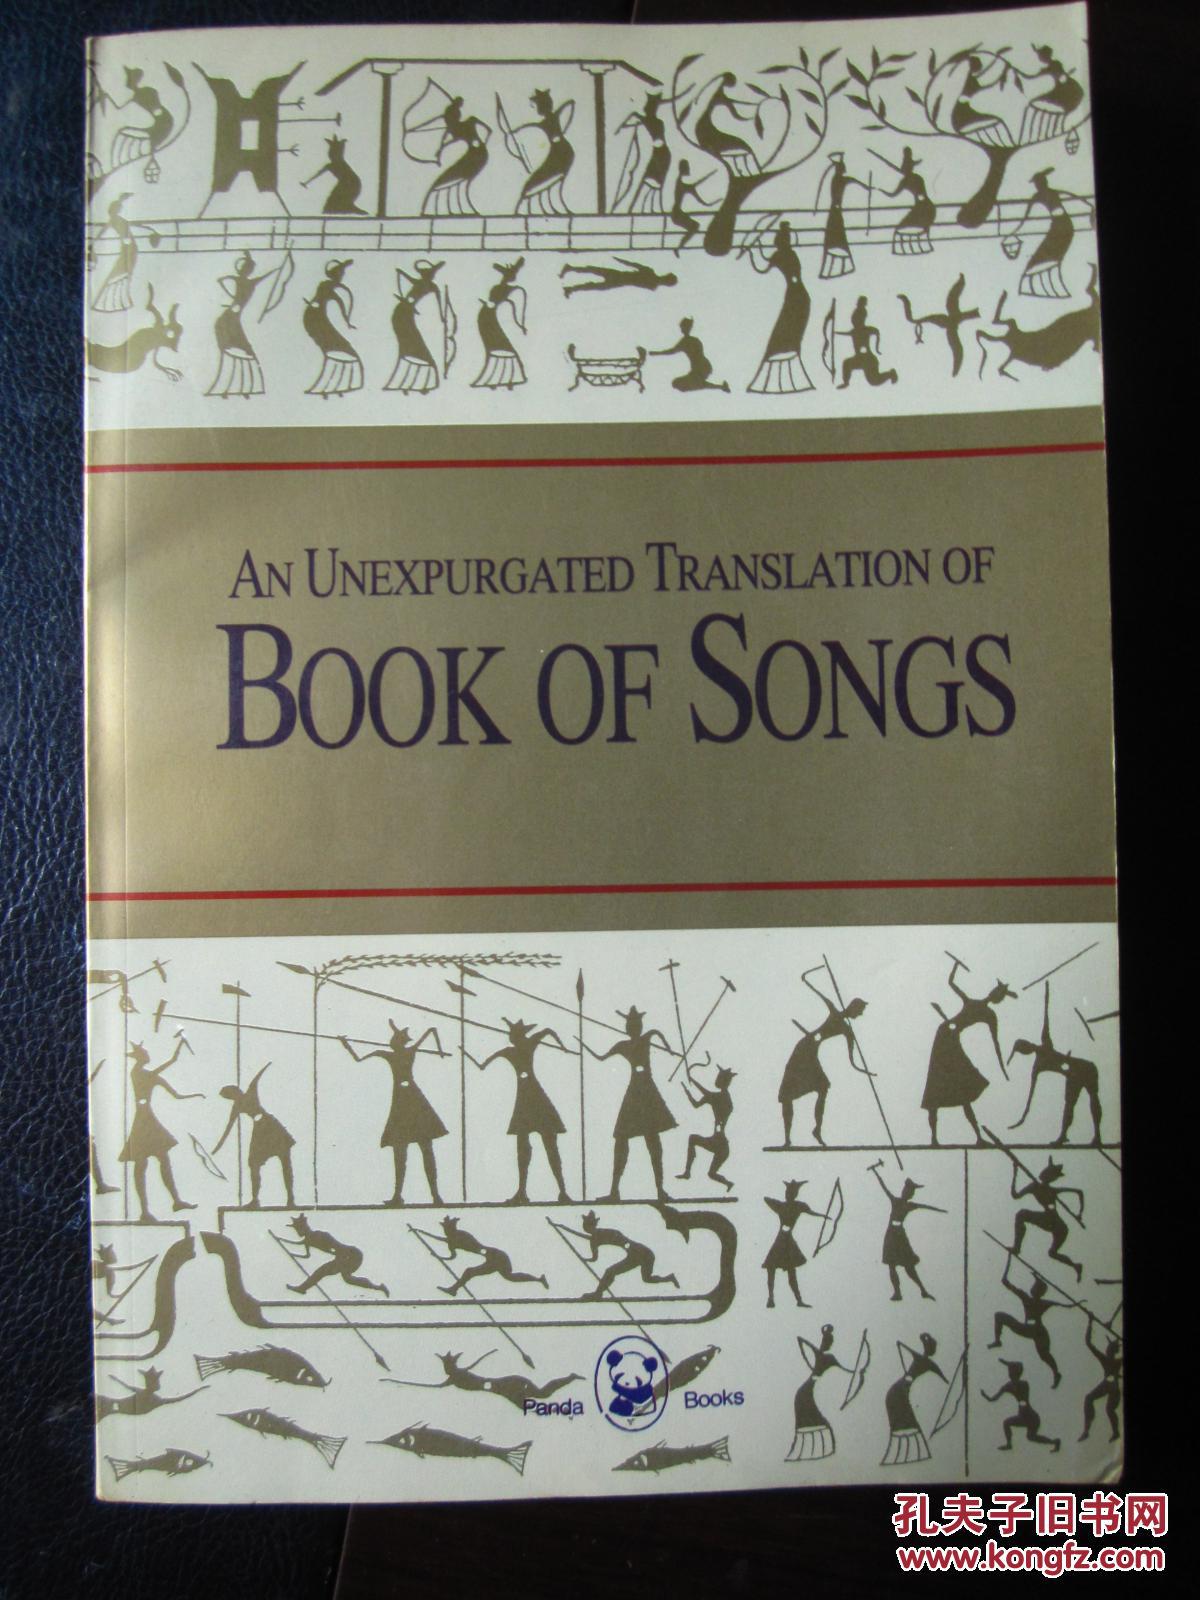 Book of Songs 许渊冲翻译《诗经》英文版 熊猫